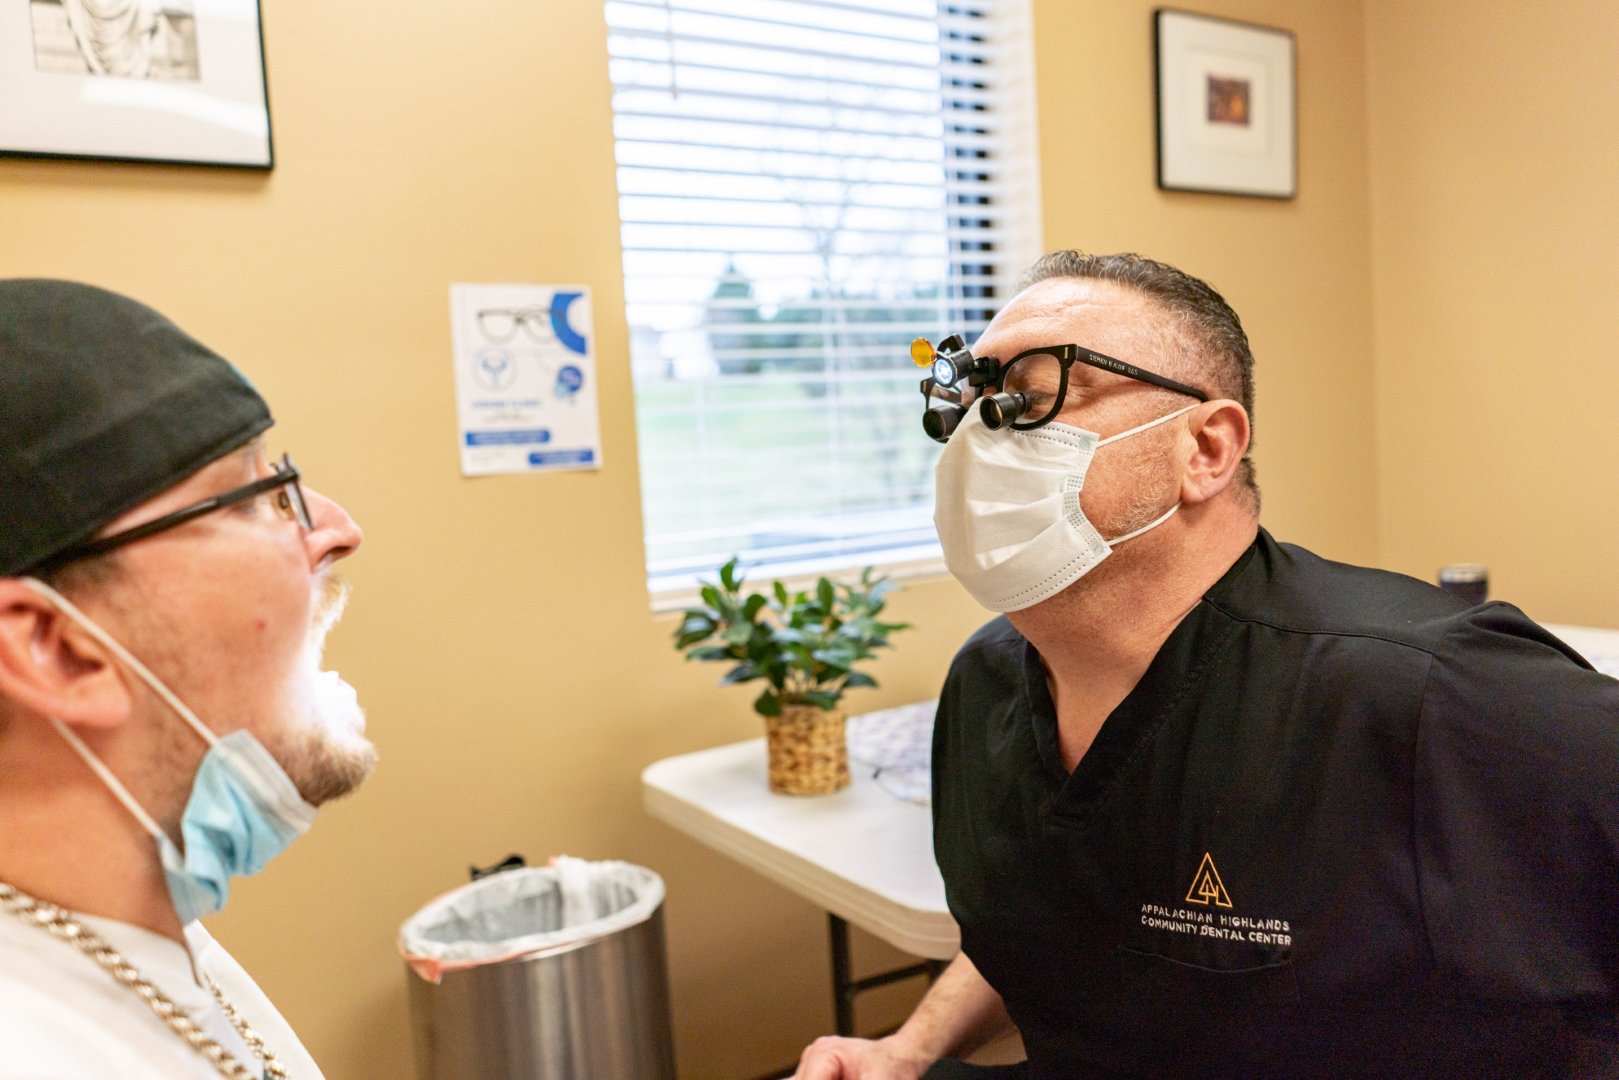 Mission — Appalachian Highlands Community Dental Center